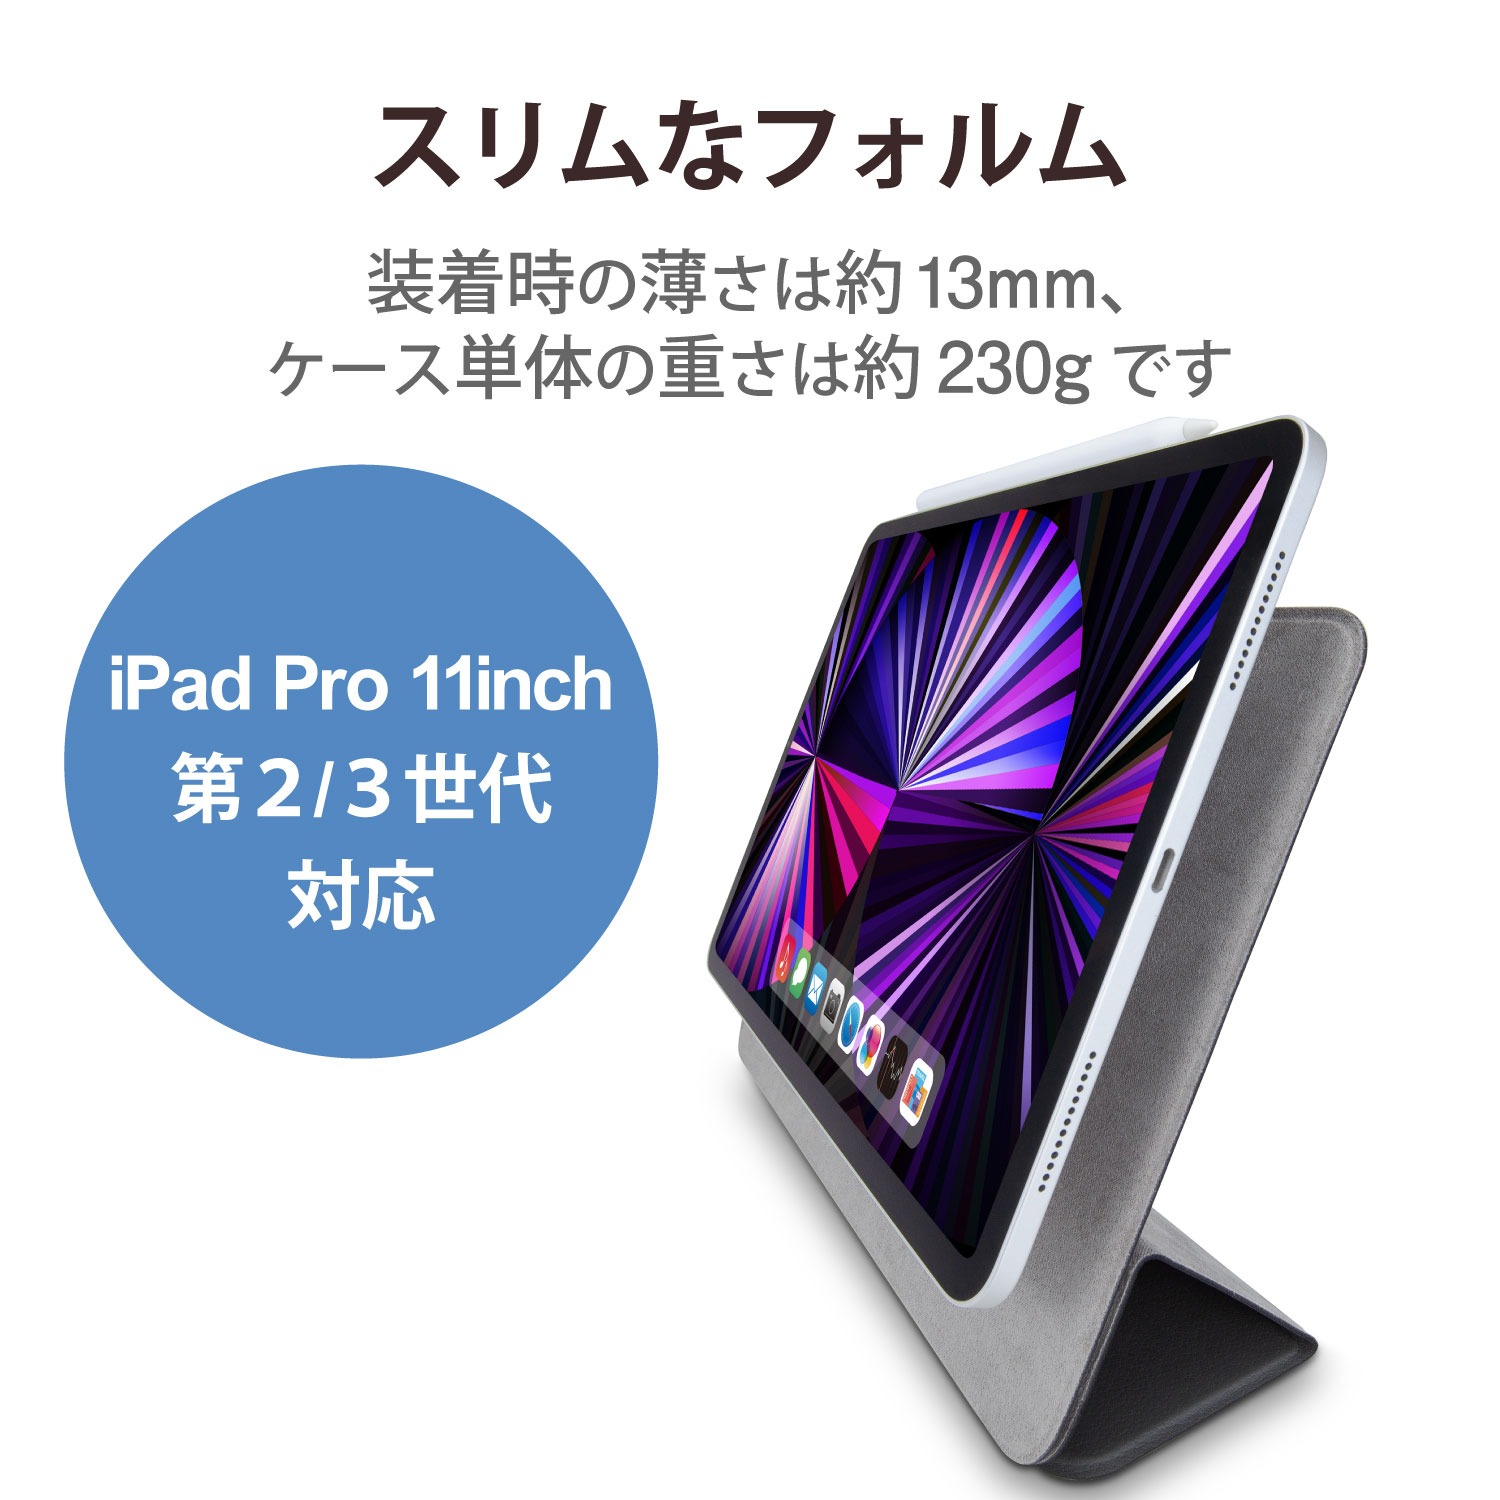 iPad Mini 3 2 1 ケース 赤 超薄型 超軽量 ソフト - iPadアクセサリー